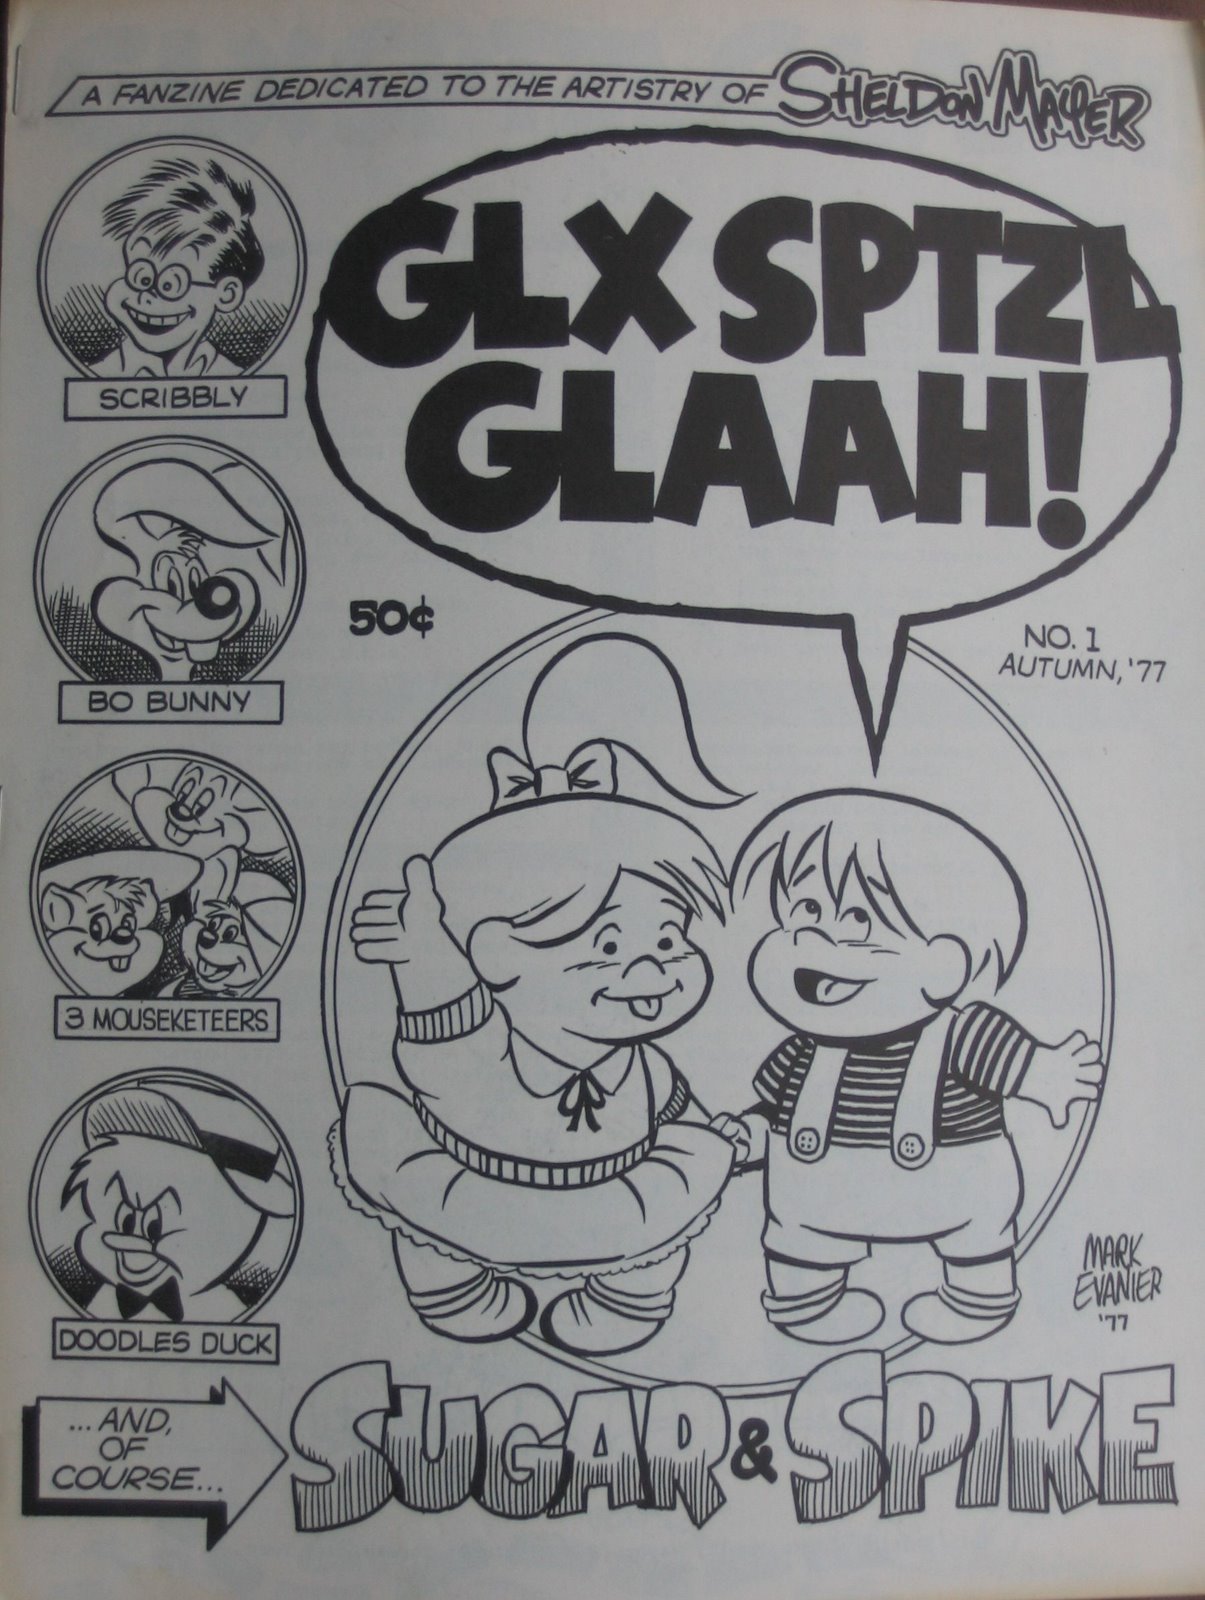 [GLX+SPTZL+GLAAH!.jpg]